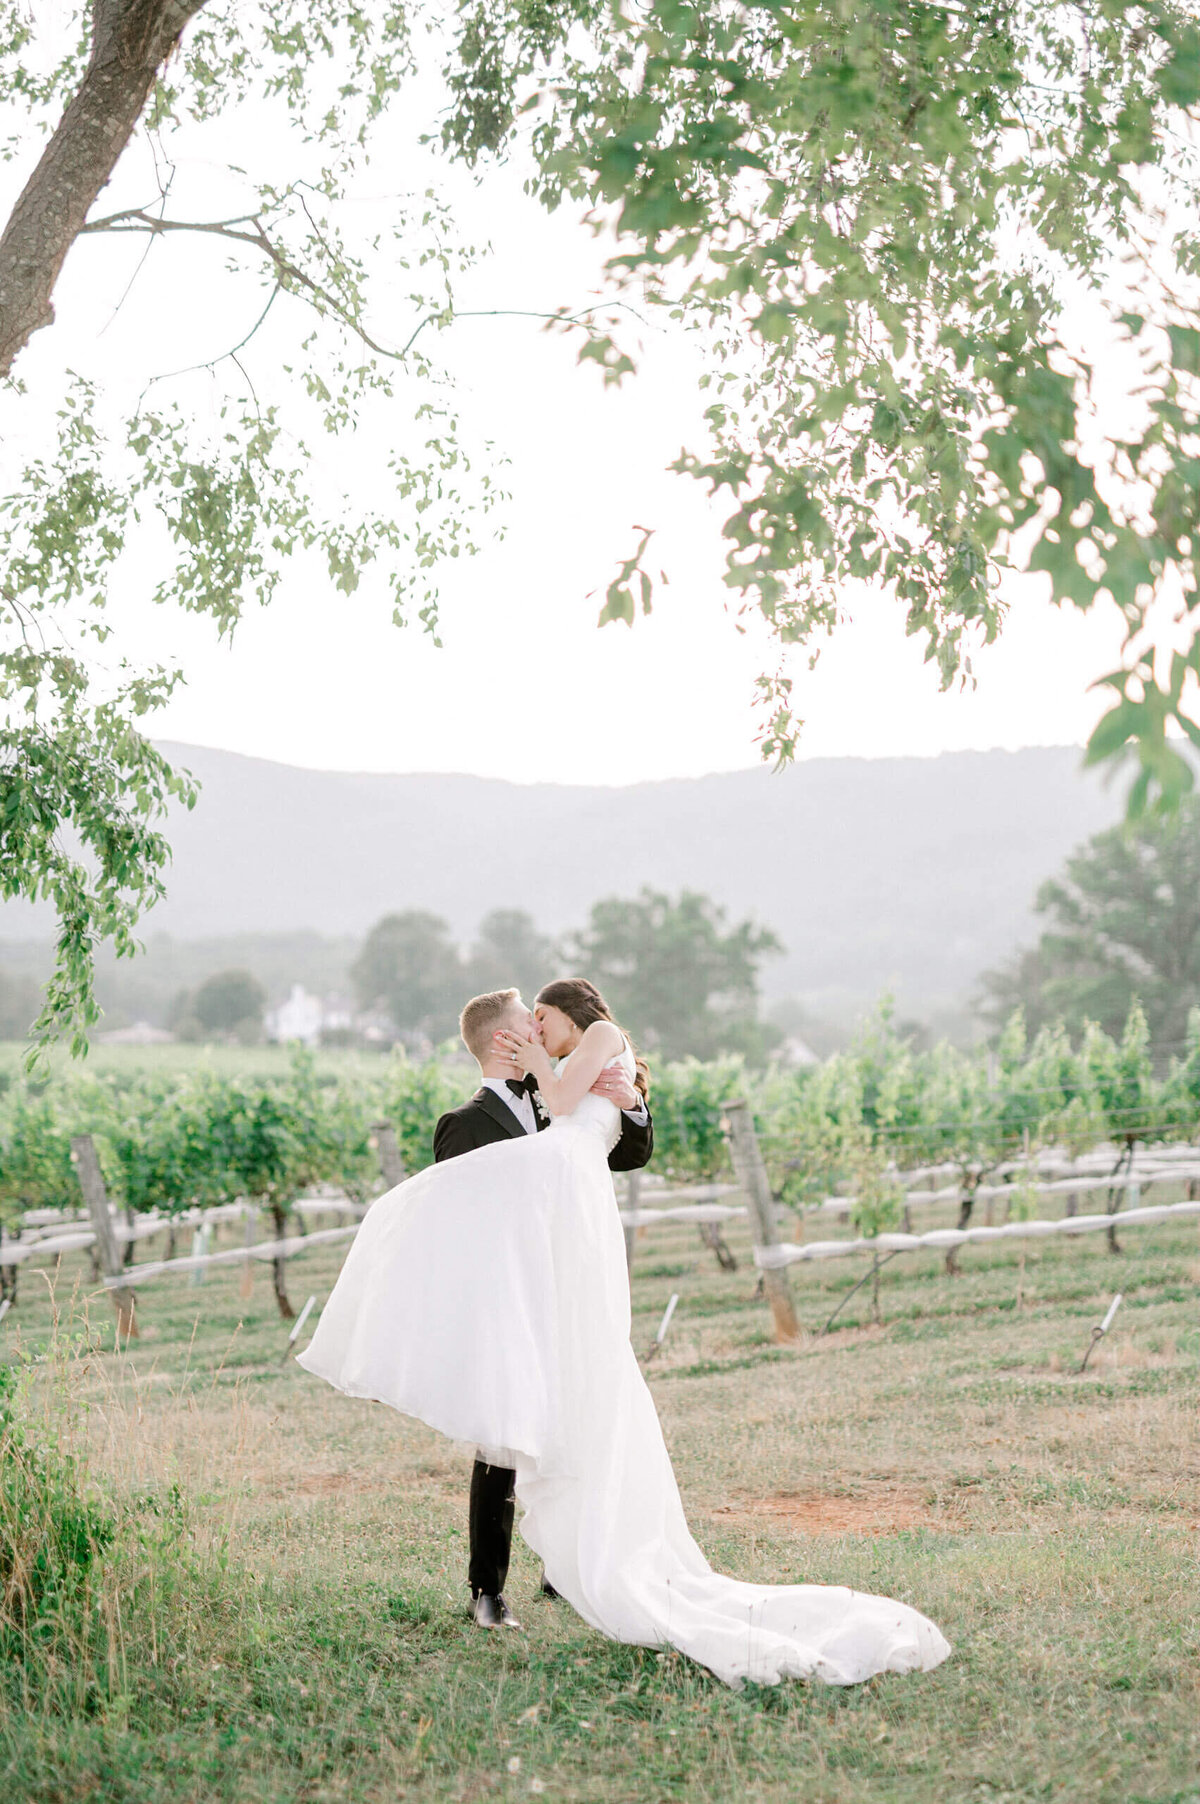 Groom picking bride up to kiss her in vineyard